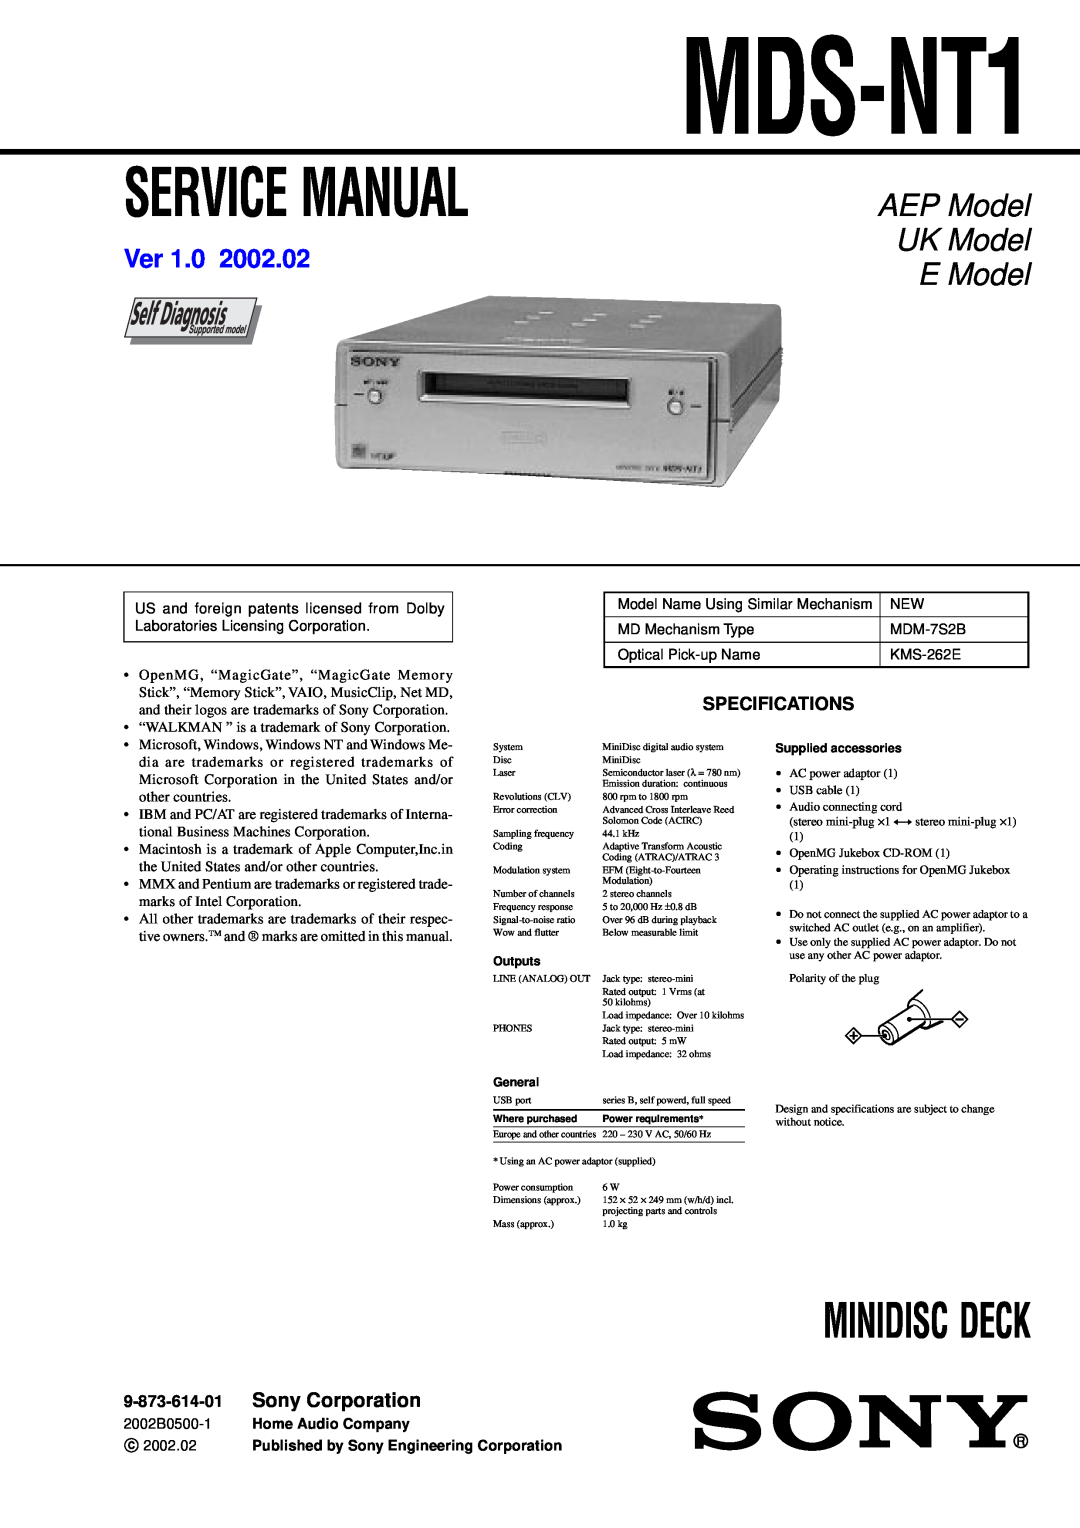 Sony MDS-NT1 service manual Specifications, Minidisc Deck, AEP Model, UK Model, E Model, Ver, Sony Corporation 